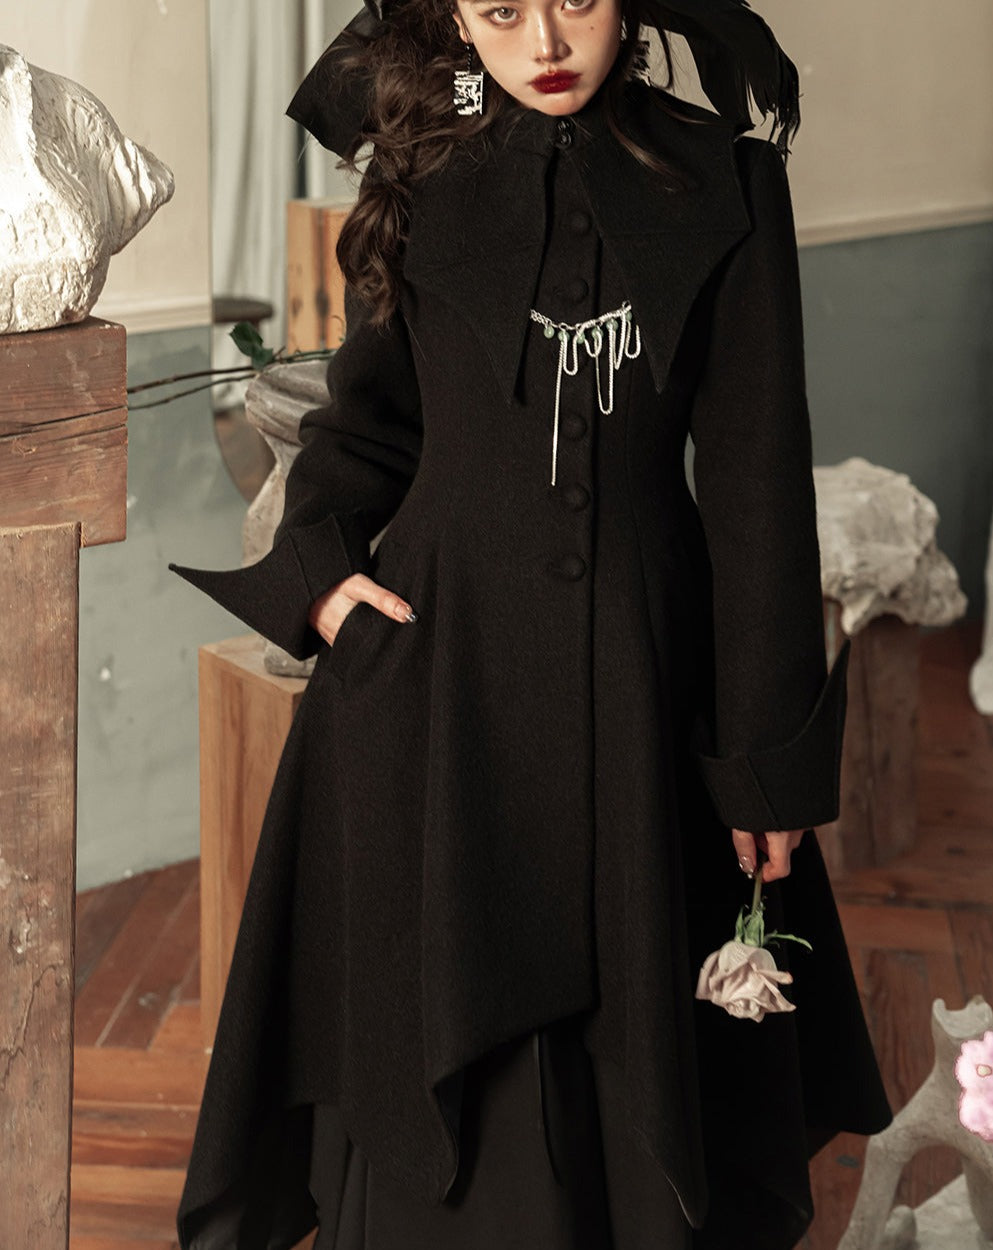 Gothic lolita bat black coat